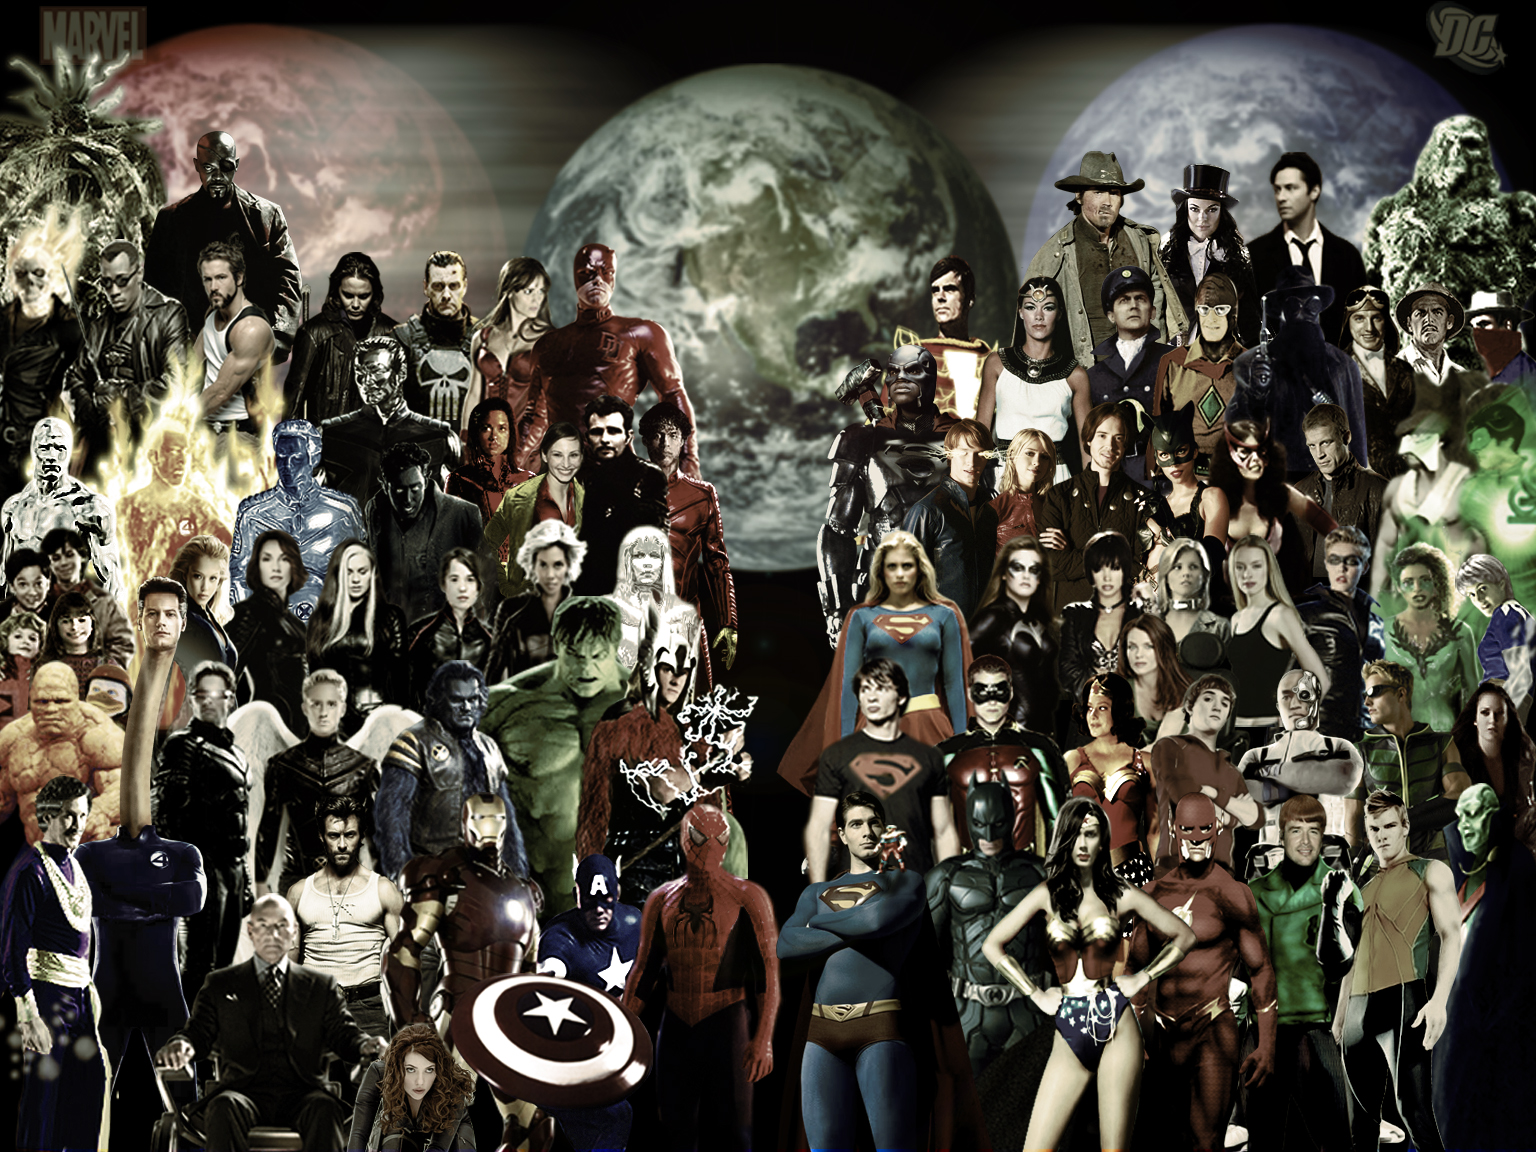 comics, crossover, alex power, angel (marvel comics), aquaman, atom (dc comics), avengers, bart allen, beast (marvel comics), billy batson, birds of prey (dc comics), black widow, catwoman, charles xavier, cyborg (dc comics), cyclops (marvel comics), daredevil, deadpool, emma frost, flash, gambit (marvel comics), green lantern, guy gardner, hawkman (dc comics), hulk, human torch (marvel comics), iceman (marvel comics), impulse (dc comics), invisible woman, jack power, jean grey, john constantine, jonah hex, julie power, justice league, katie power, kitty pryde, legion of super heroes, lightning lad, mister fantastic, nick fury, nightcrawler (marvel comics), oliver queen, peter parker, power pack, professor x, punisher, robin (dc comics), rogue (marvel comics), saturn girl, shazam (dc comics), silver surfer, smallville, spider man, storm (marvel comics), superboy, supergirl, superman, swamp thing, thing (marvel comics), thor, wade wilson, warren worthington iii, wolverine, wonder girl, wonder woman, x men, zatanna